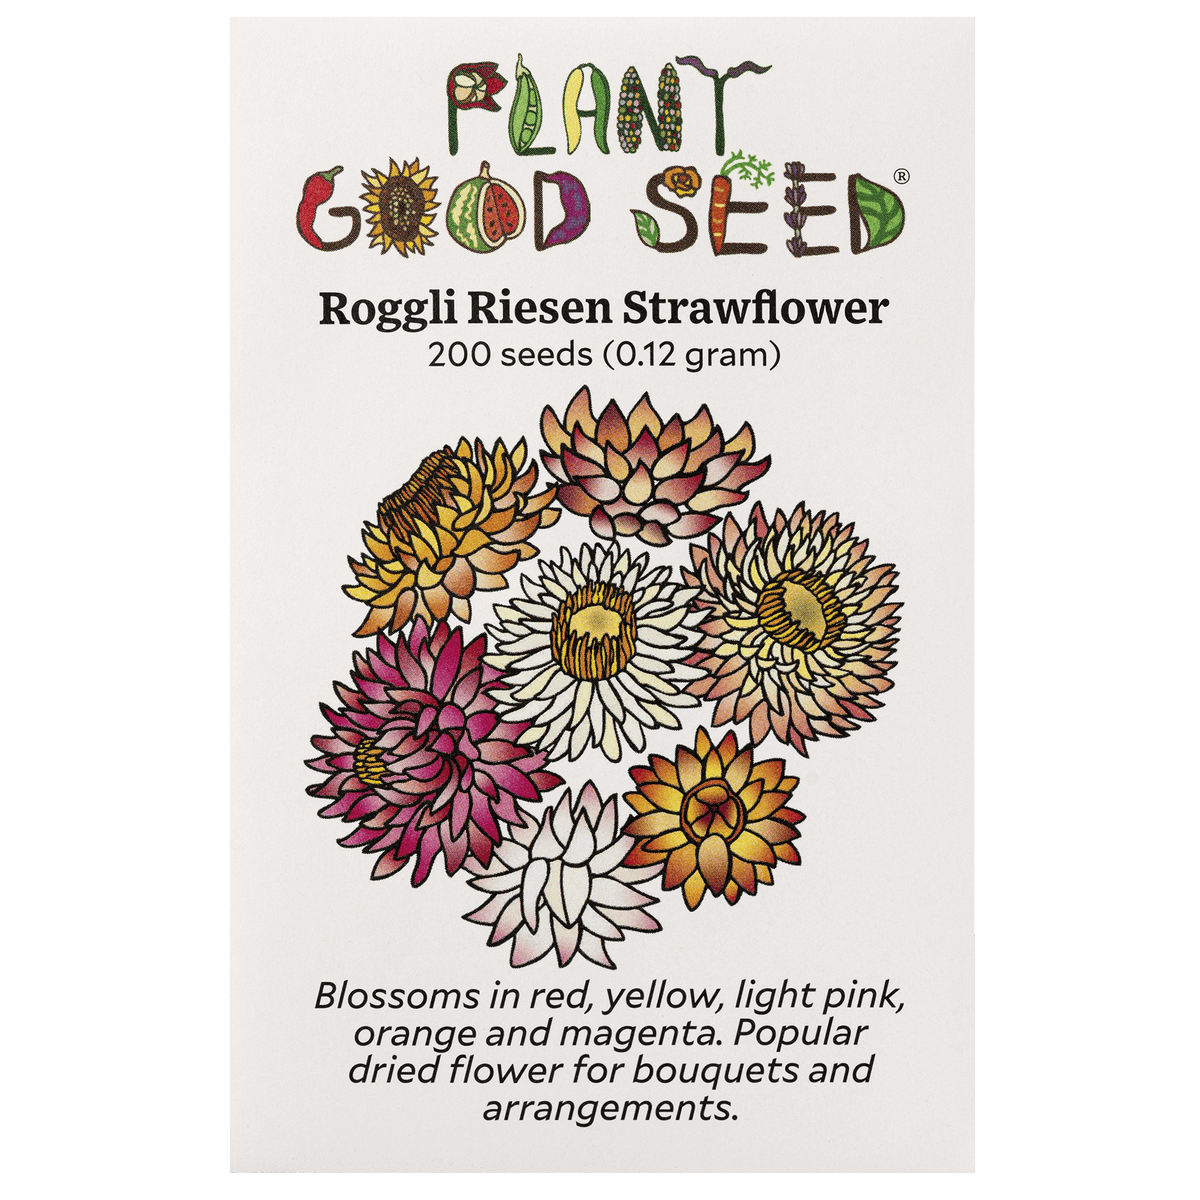 Roggli Riesen strawflower seed packet